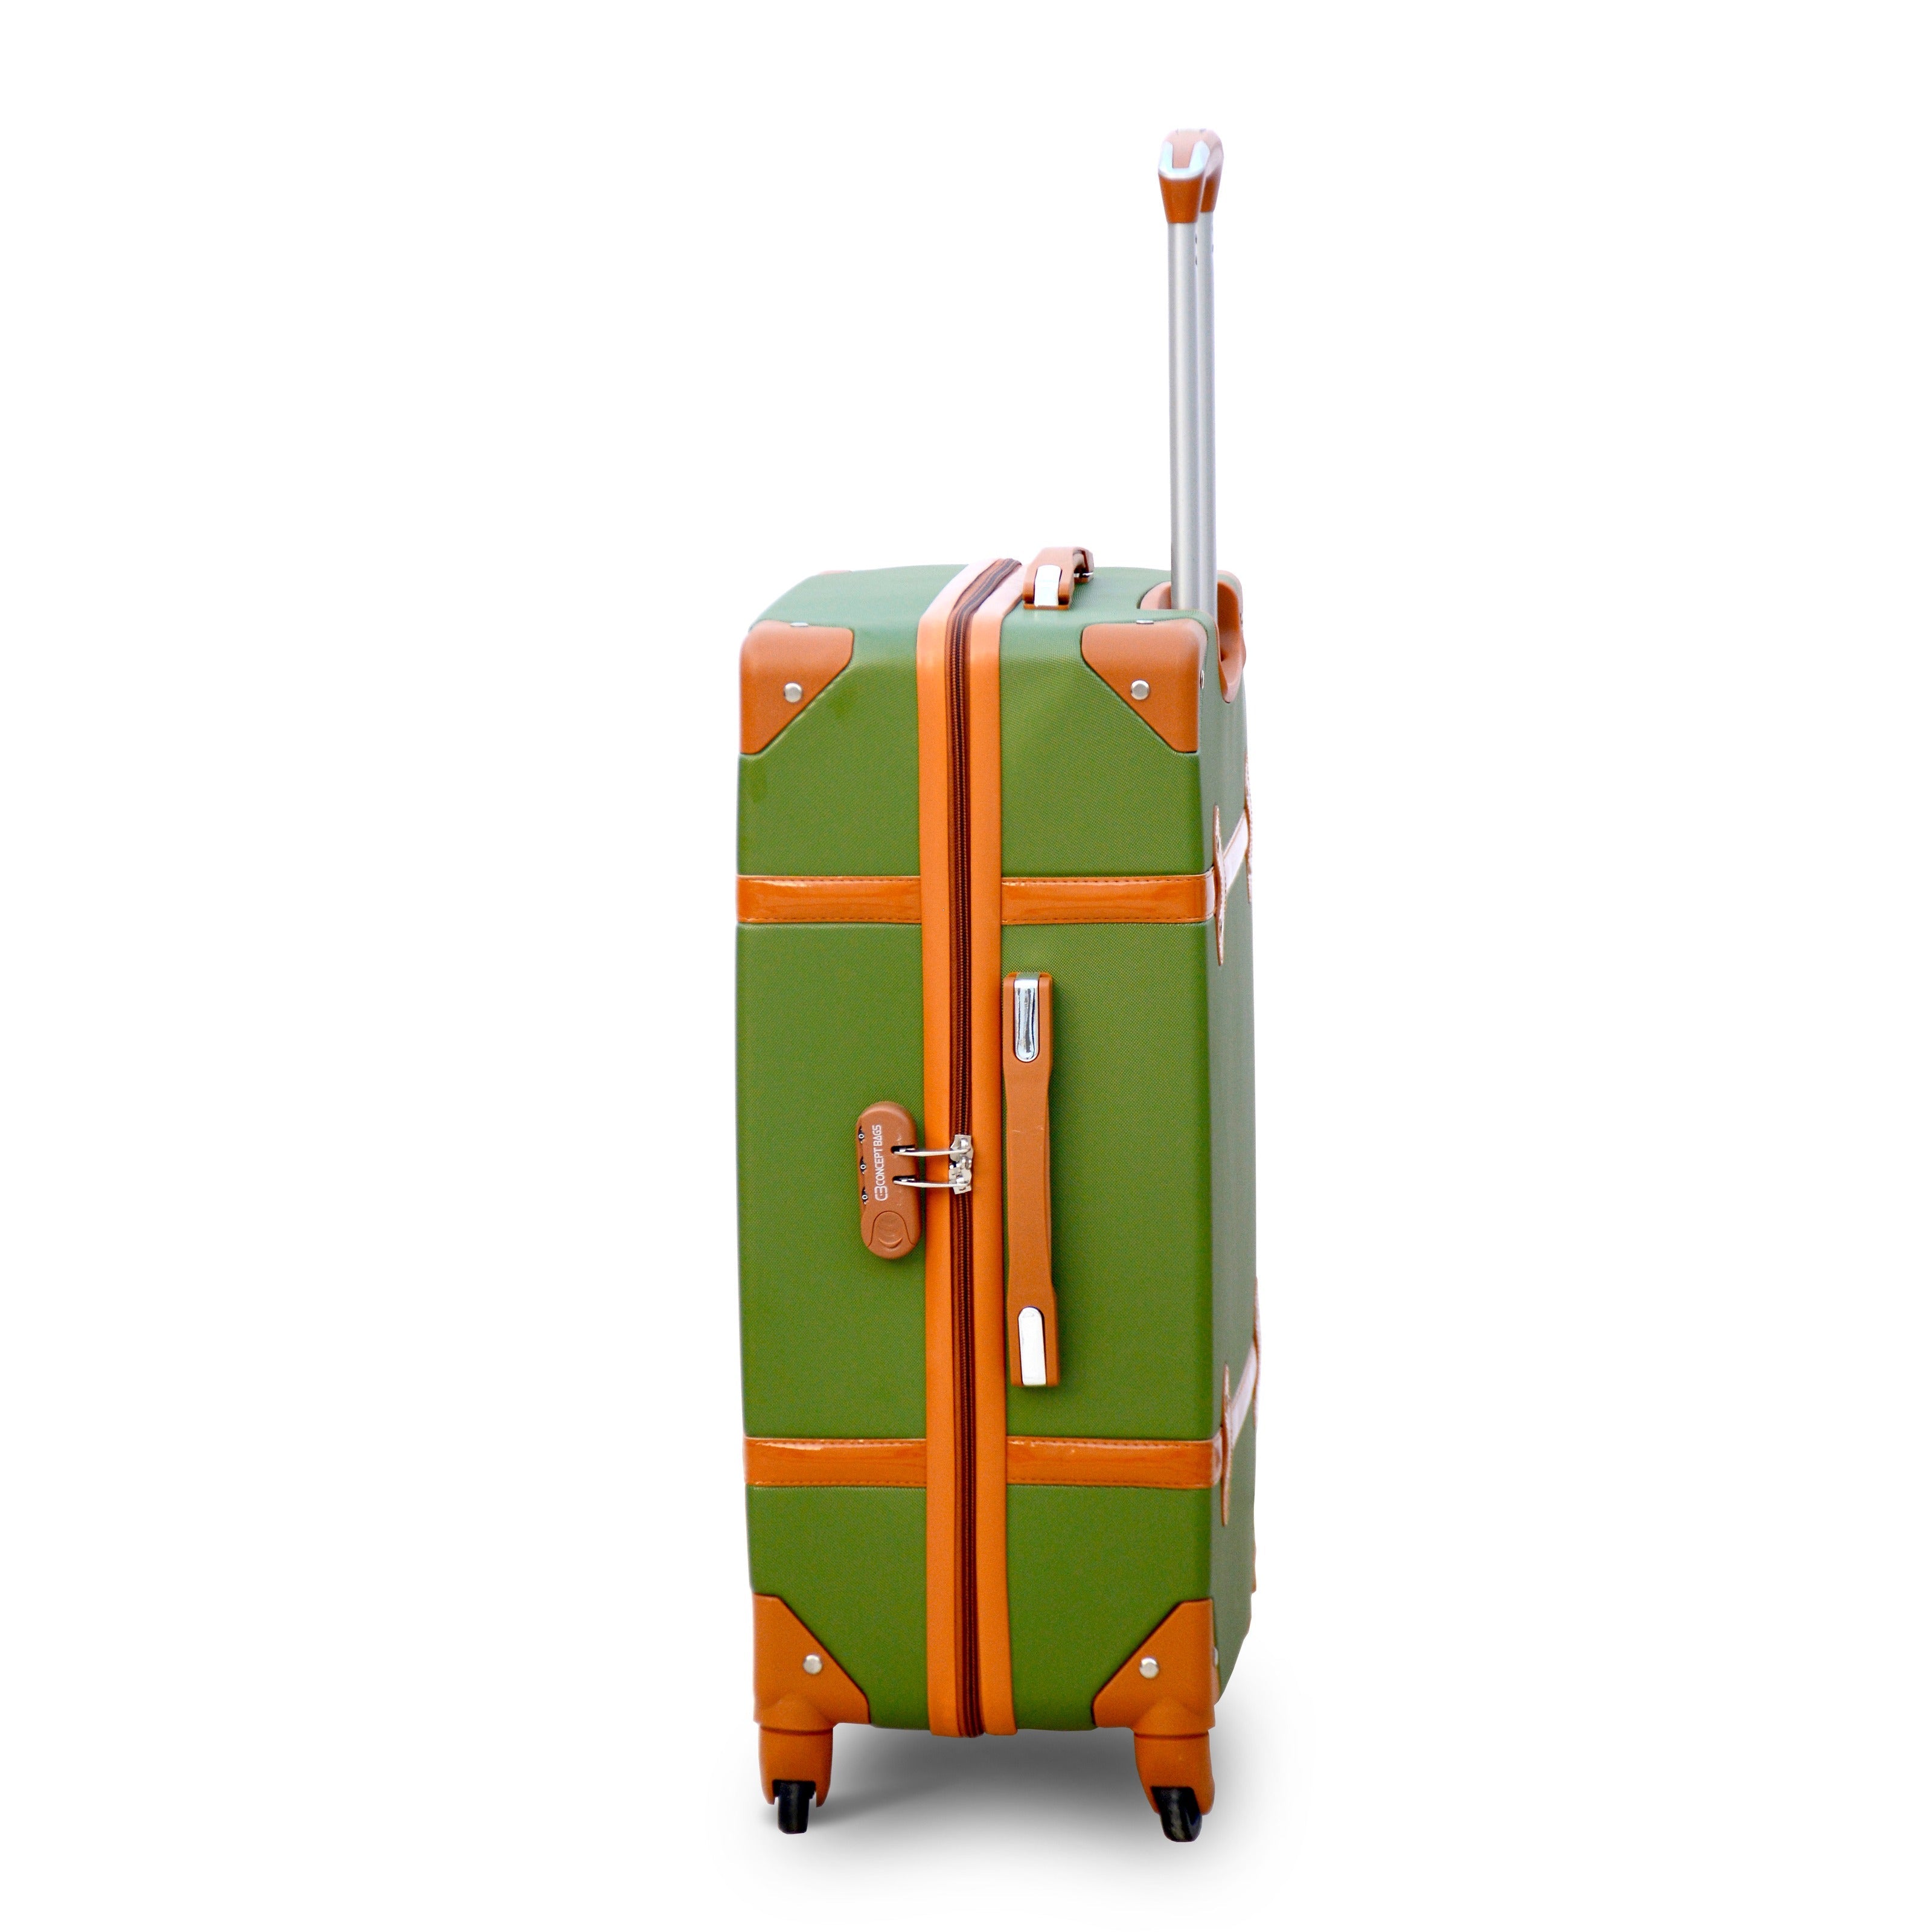 28" Green Lightweight Corner Guard ABS Luggage | Hard Case Trolley Bag